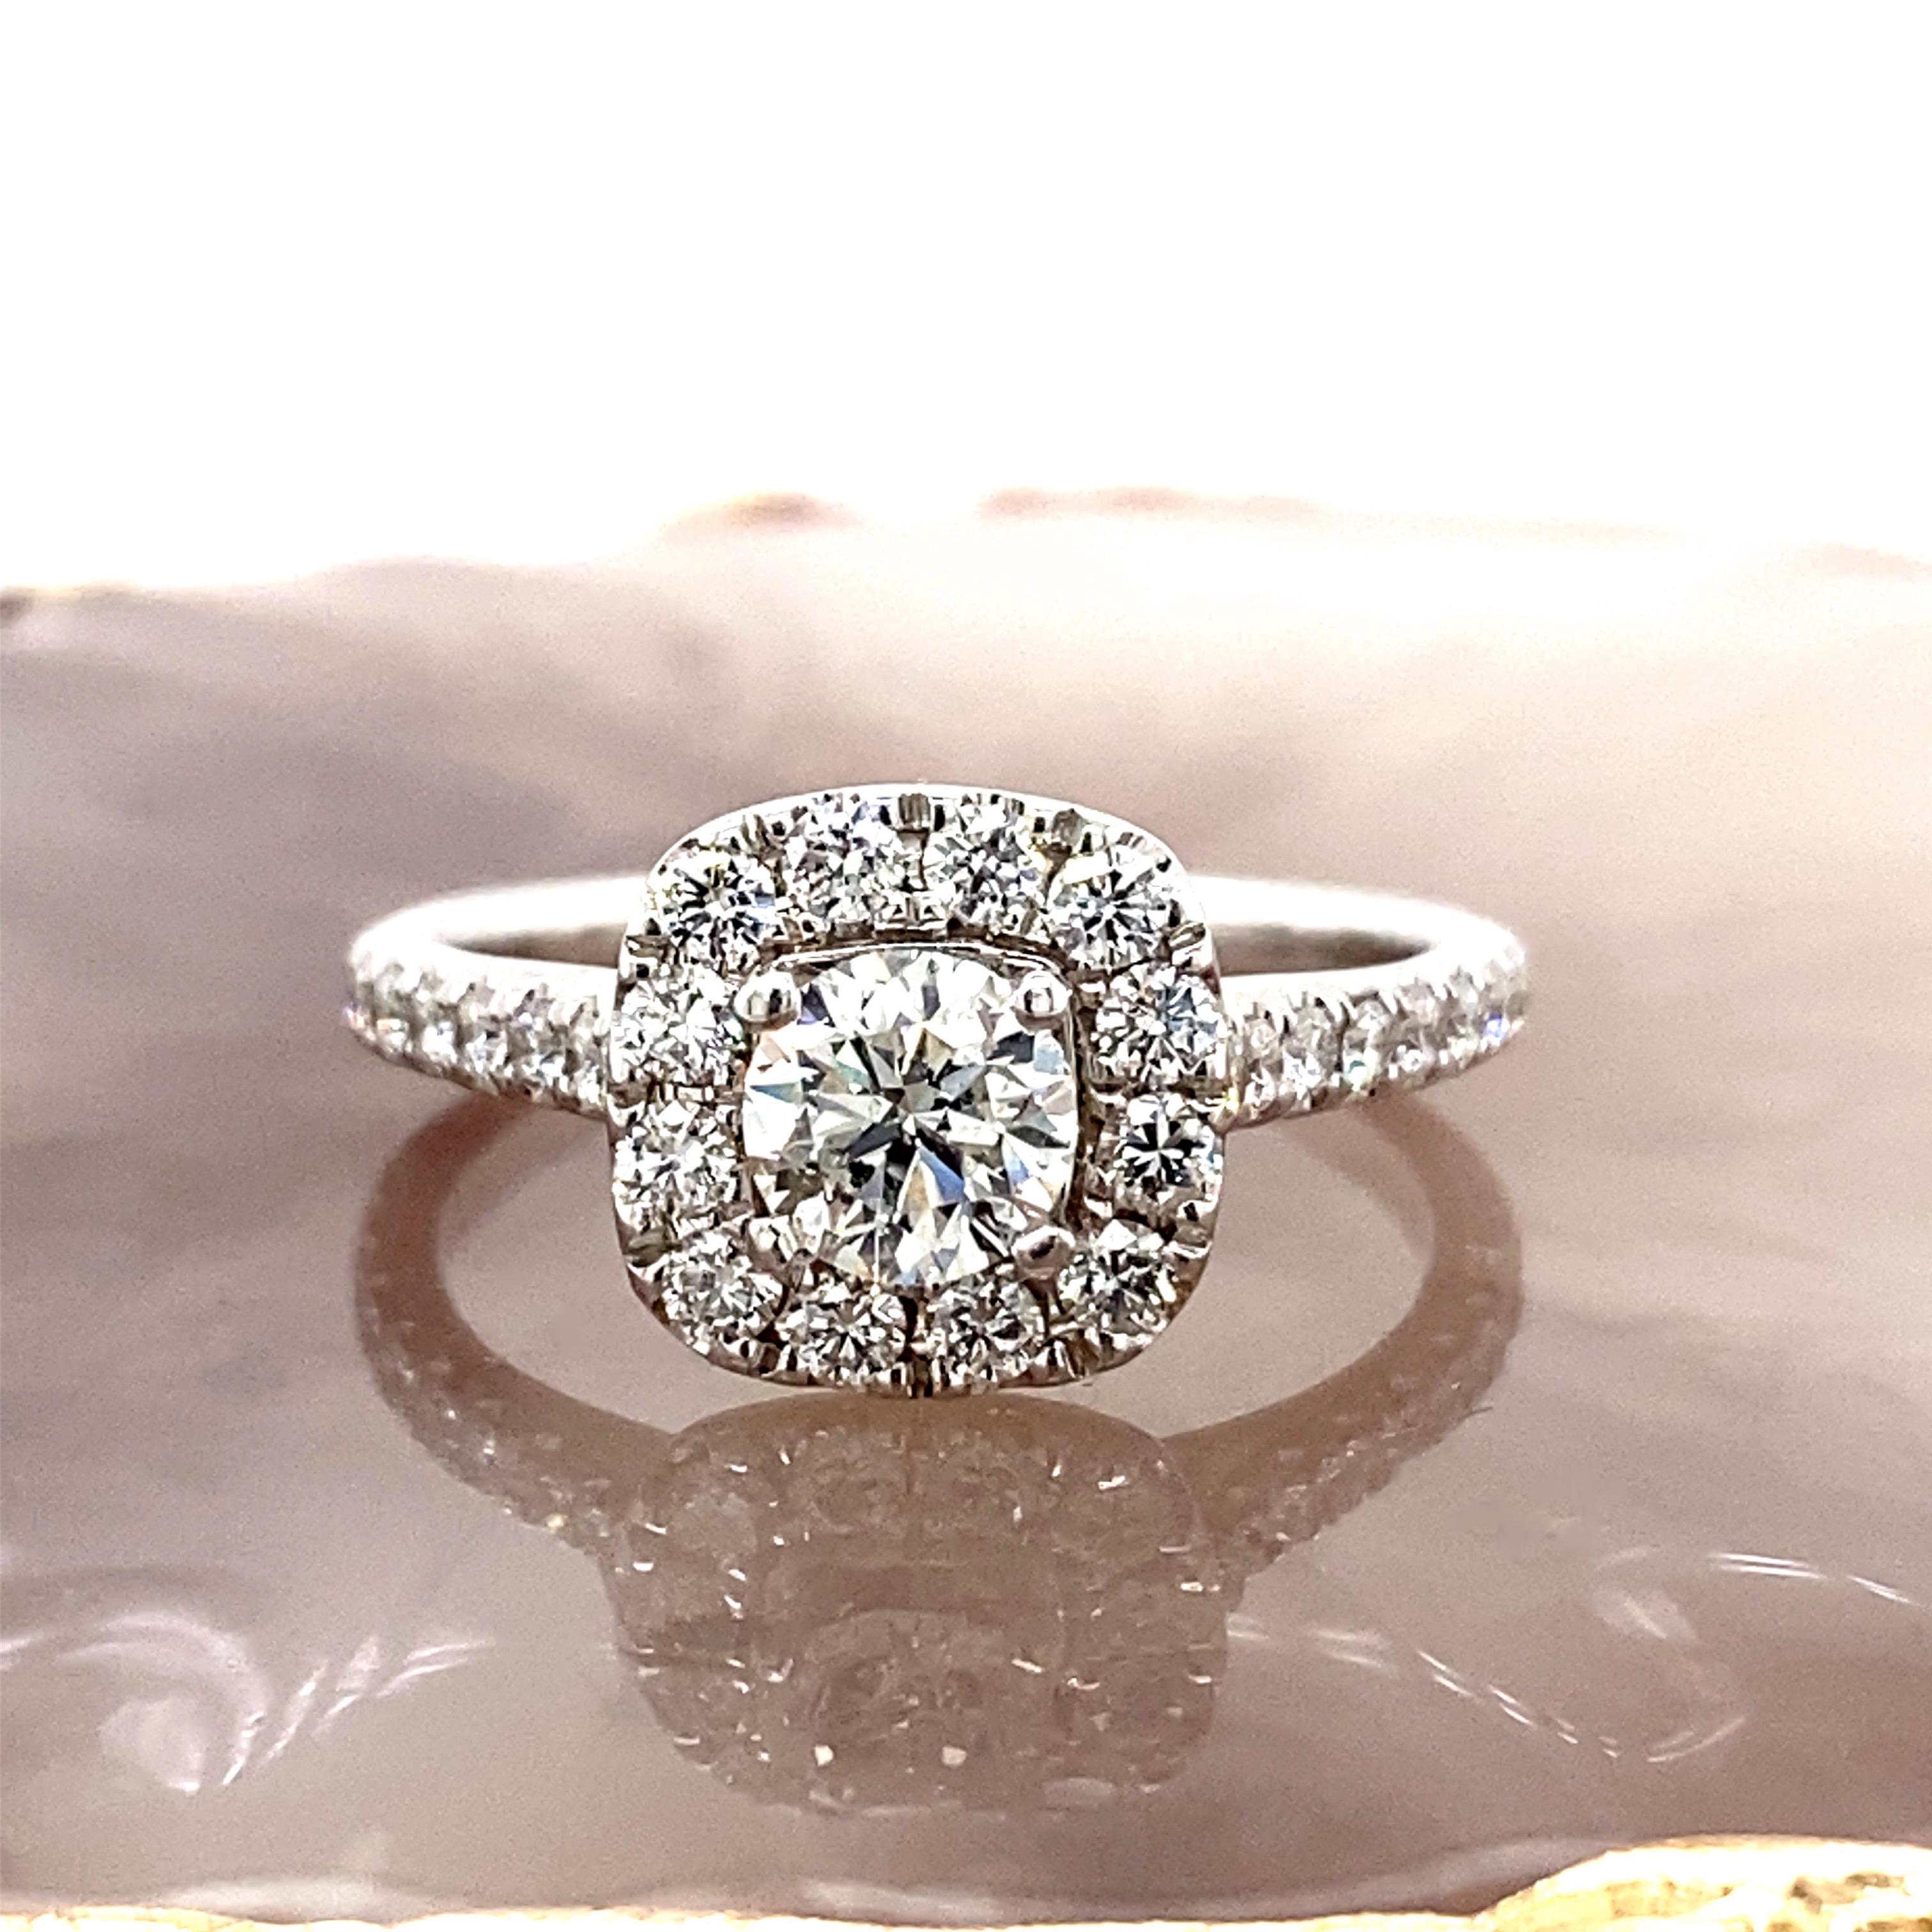 Neil Lane Diamond Halo Engagement Ring
Style:  Halo 
Metal:  14kt White Gold
Size:  9 - sizable
TCW:  1.27 tcw
Main Diamond:  Round Brilliant Diamond 0.73 cts
Color & Clarity:  I, I1
Accent Diamonds:   52 Round Brilliant Cut Diamonds I, I1
Hallmark: